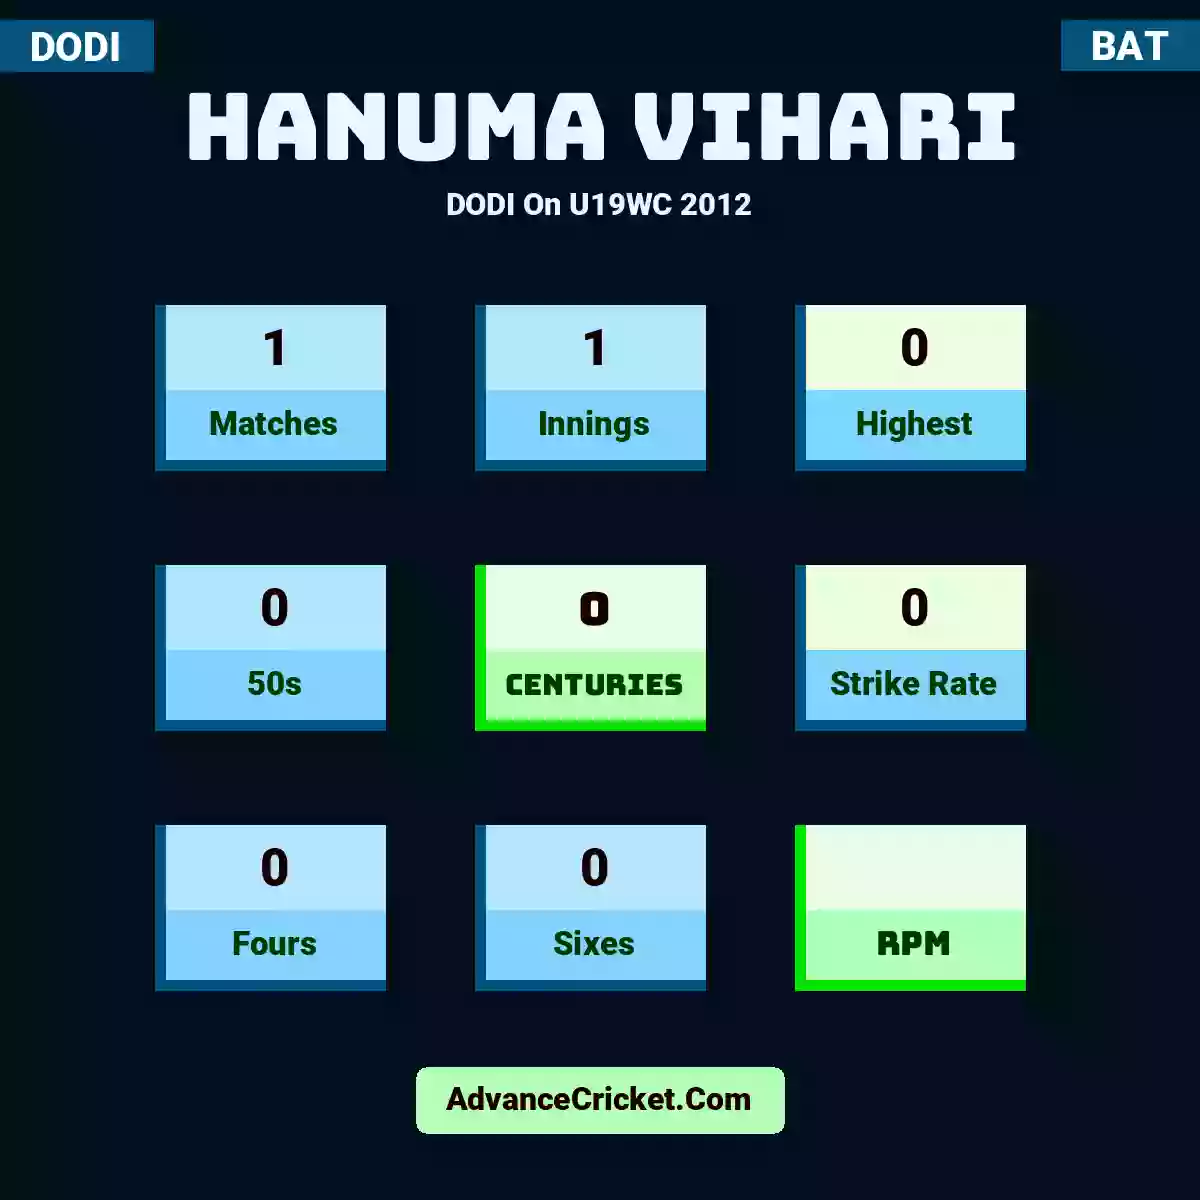 Hanuma Vihari DODI  On U19WC 2012, Hanuma Vihari played 1 matches, scored 0 runs as highest, 0 half-centuries, and 0 centuries, with a strike rate of 0. H.Vihari hit 0 fours and 0 sixes.